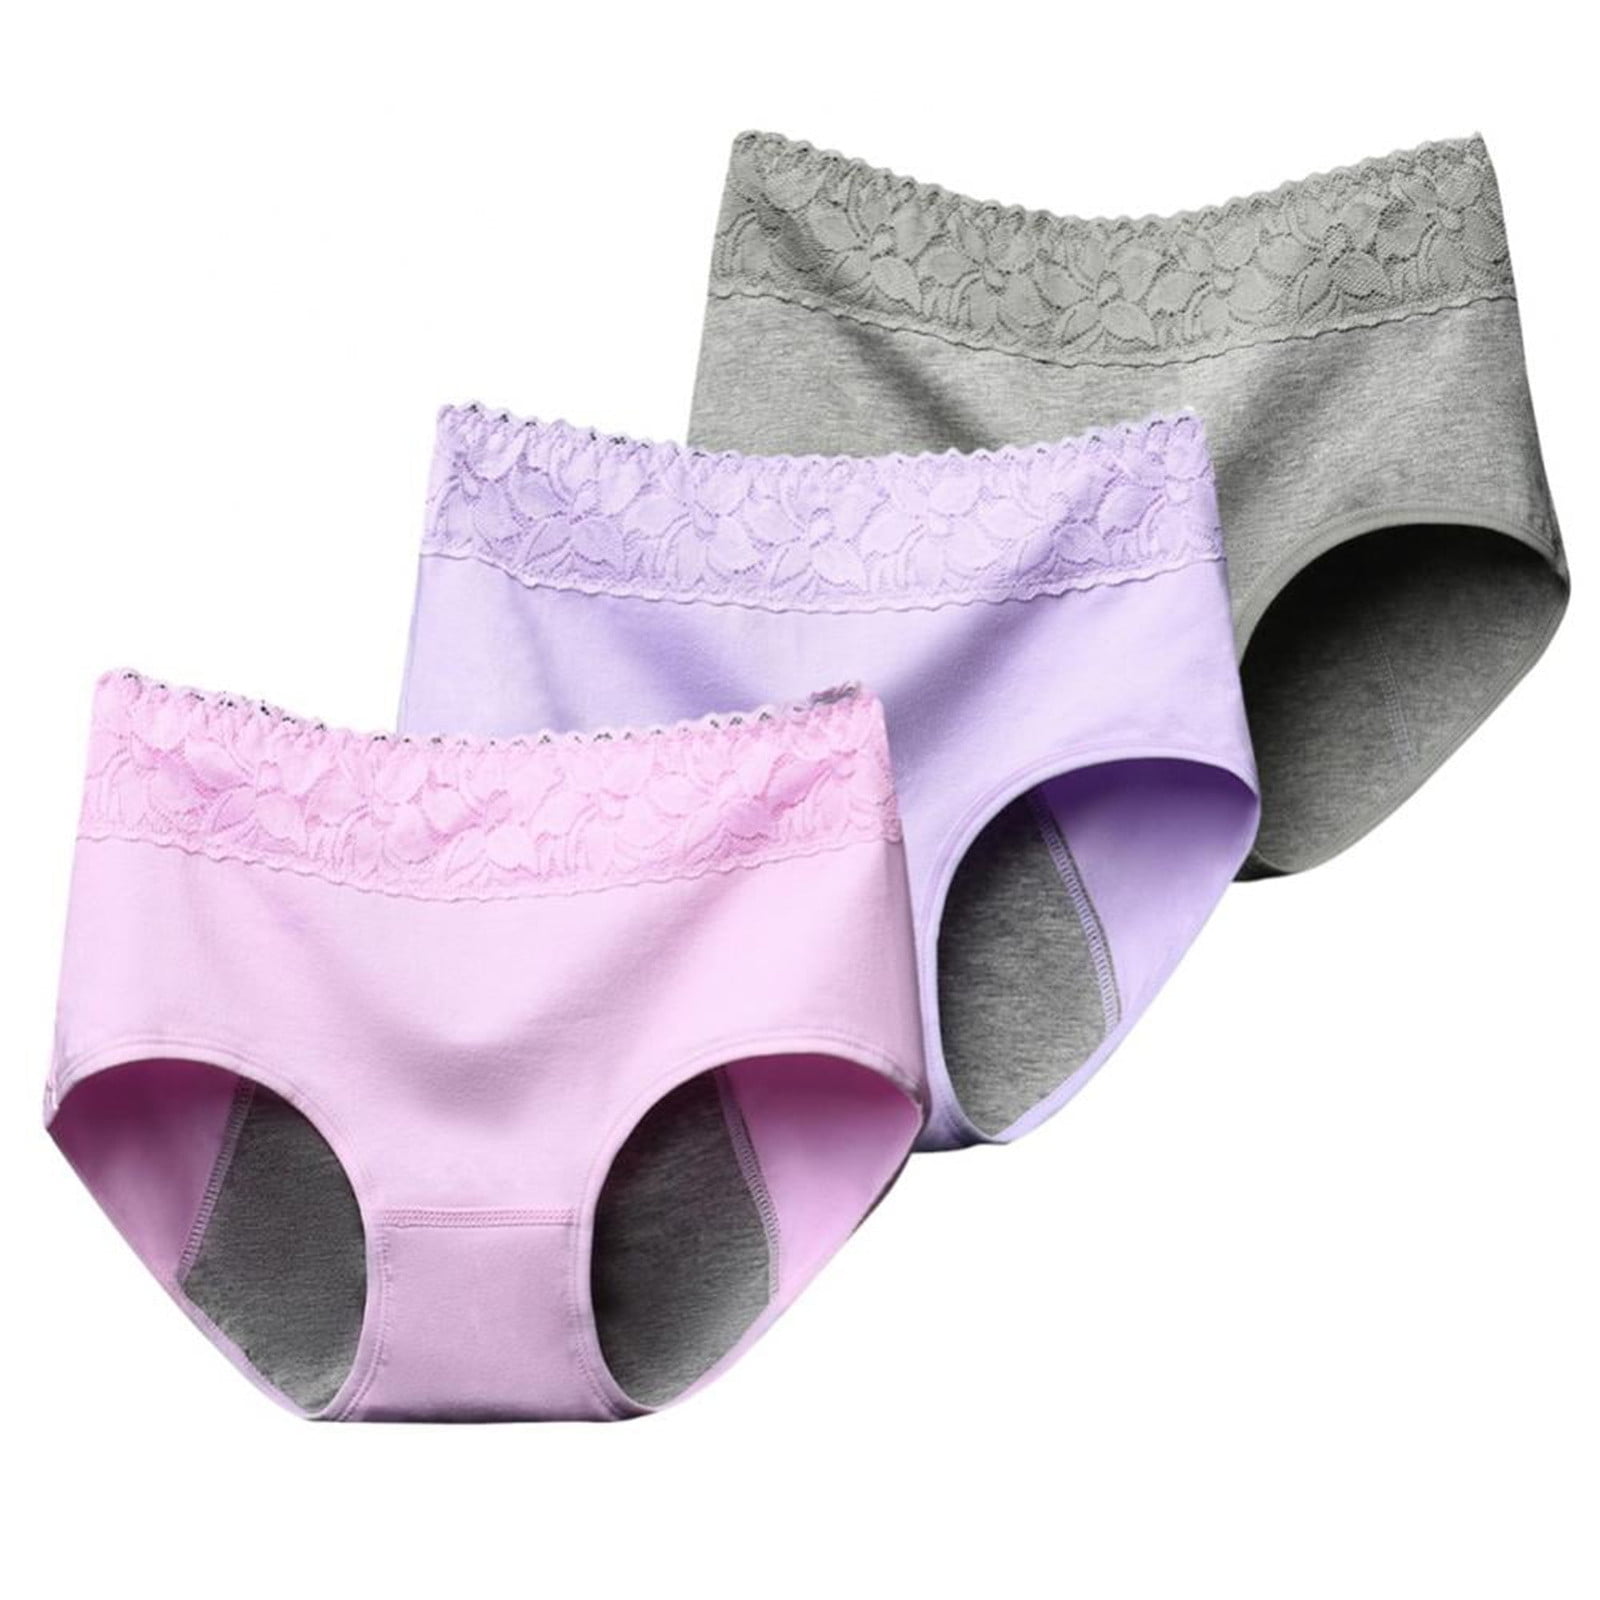 Baqcunre Period Underwear for Women Women's Large Textile Underwear Pocket  for Menstruation High Waist Anti Side Leakage Big Aunt Sanitary  Physiological Pants Underwear Womens Underwear 